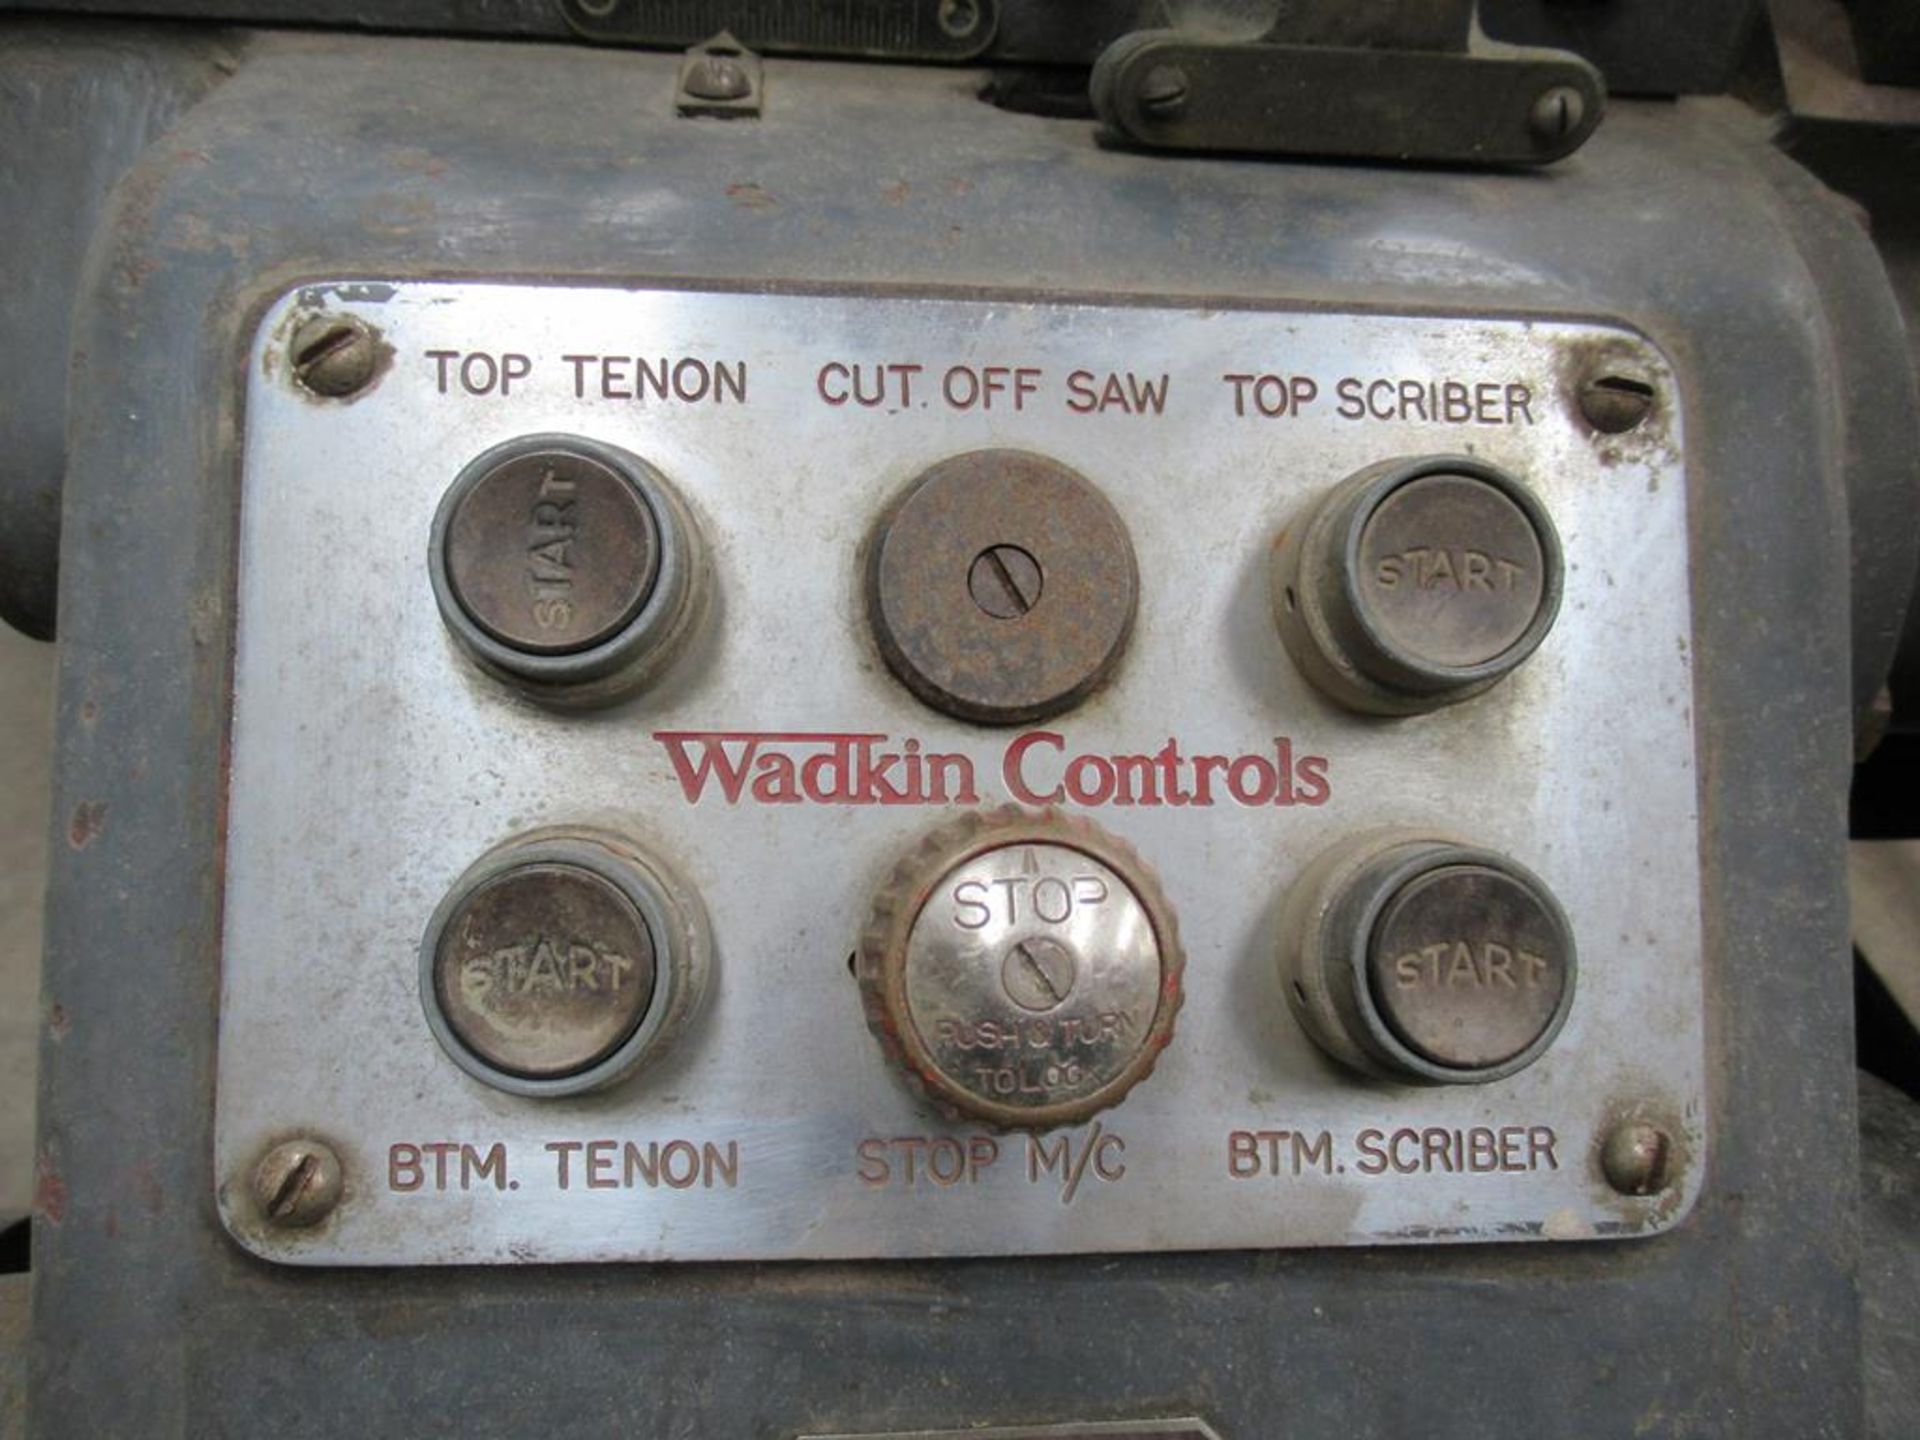 Wadkin EKA 4 head tenoning machine with brake 3 phase - Image 5 of 9